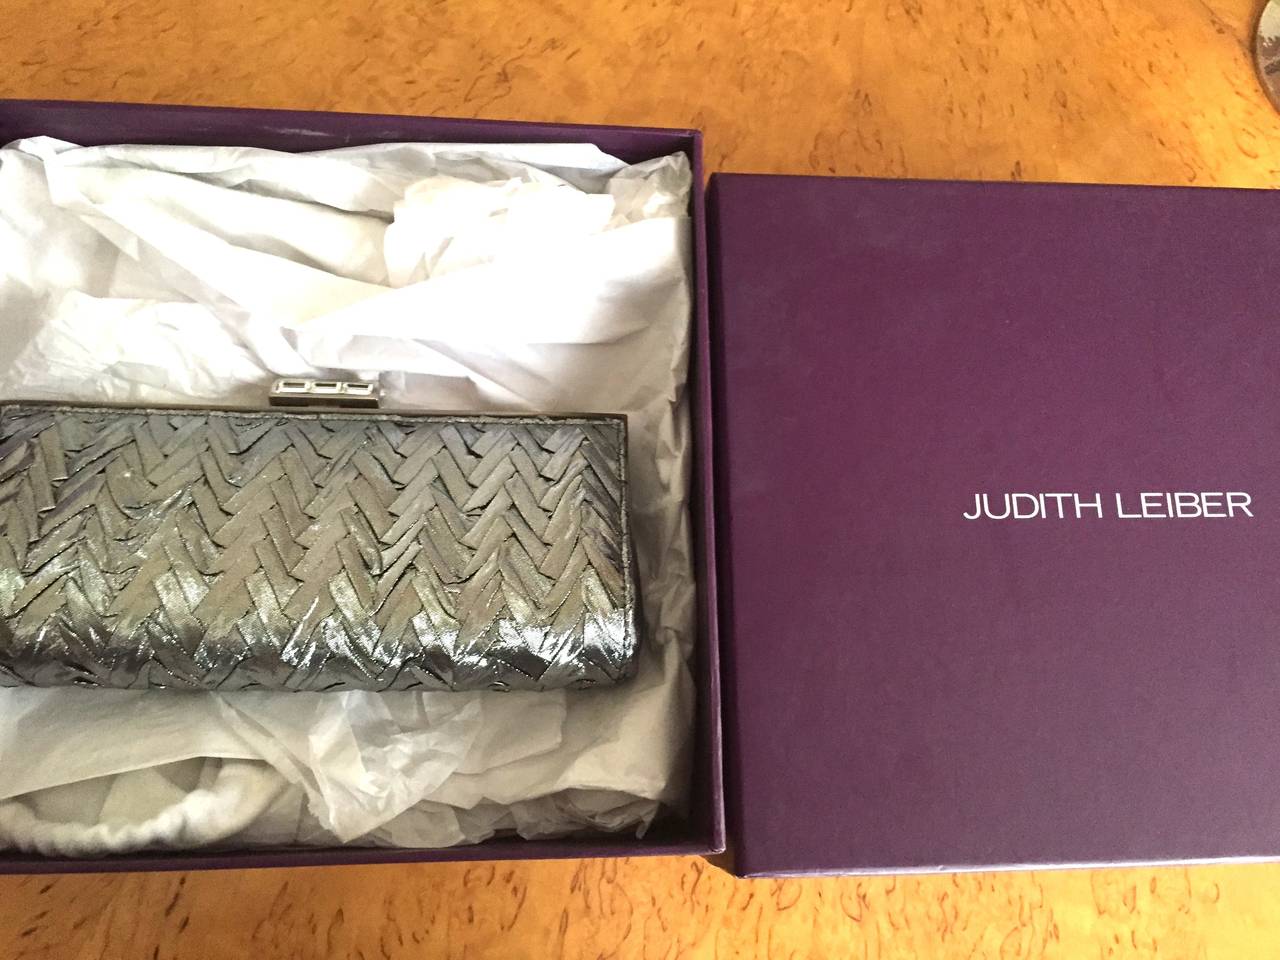 Judith Leiber Herringbone Silver Silk Clutch
New in box, there is a chain, hidden inside.